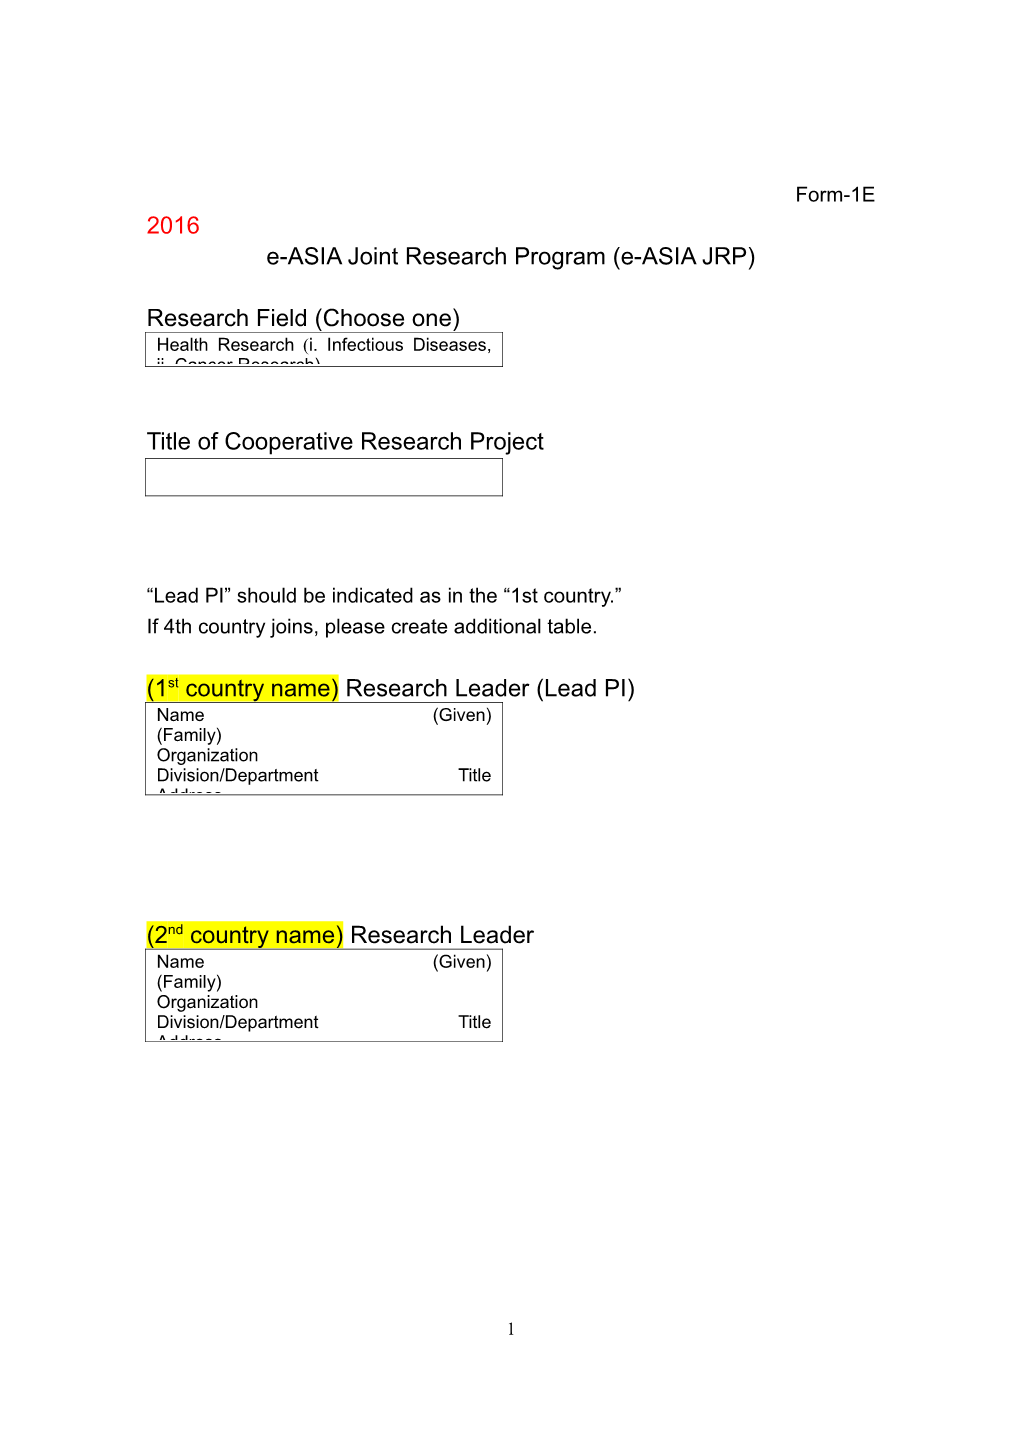 E-ASIA Joint Research Program (E-ASIA JRP)